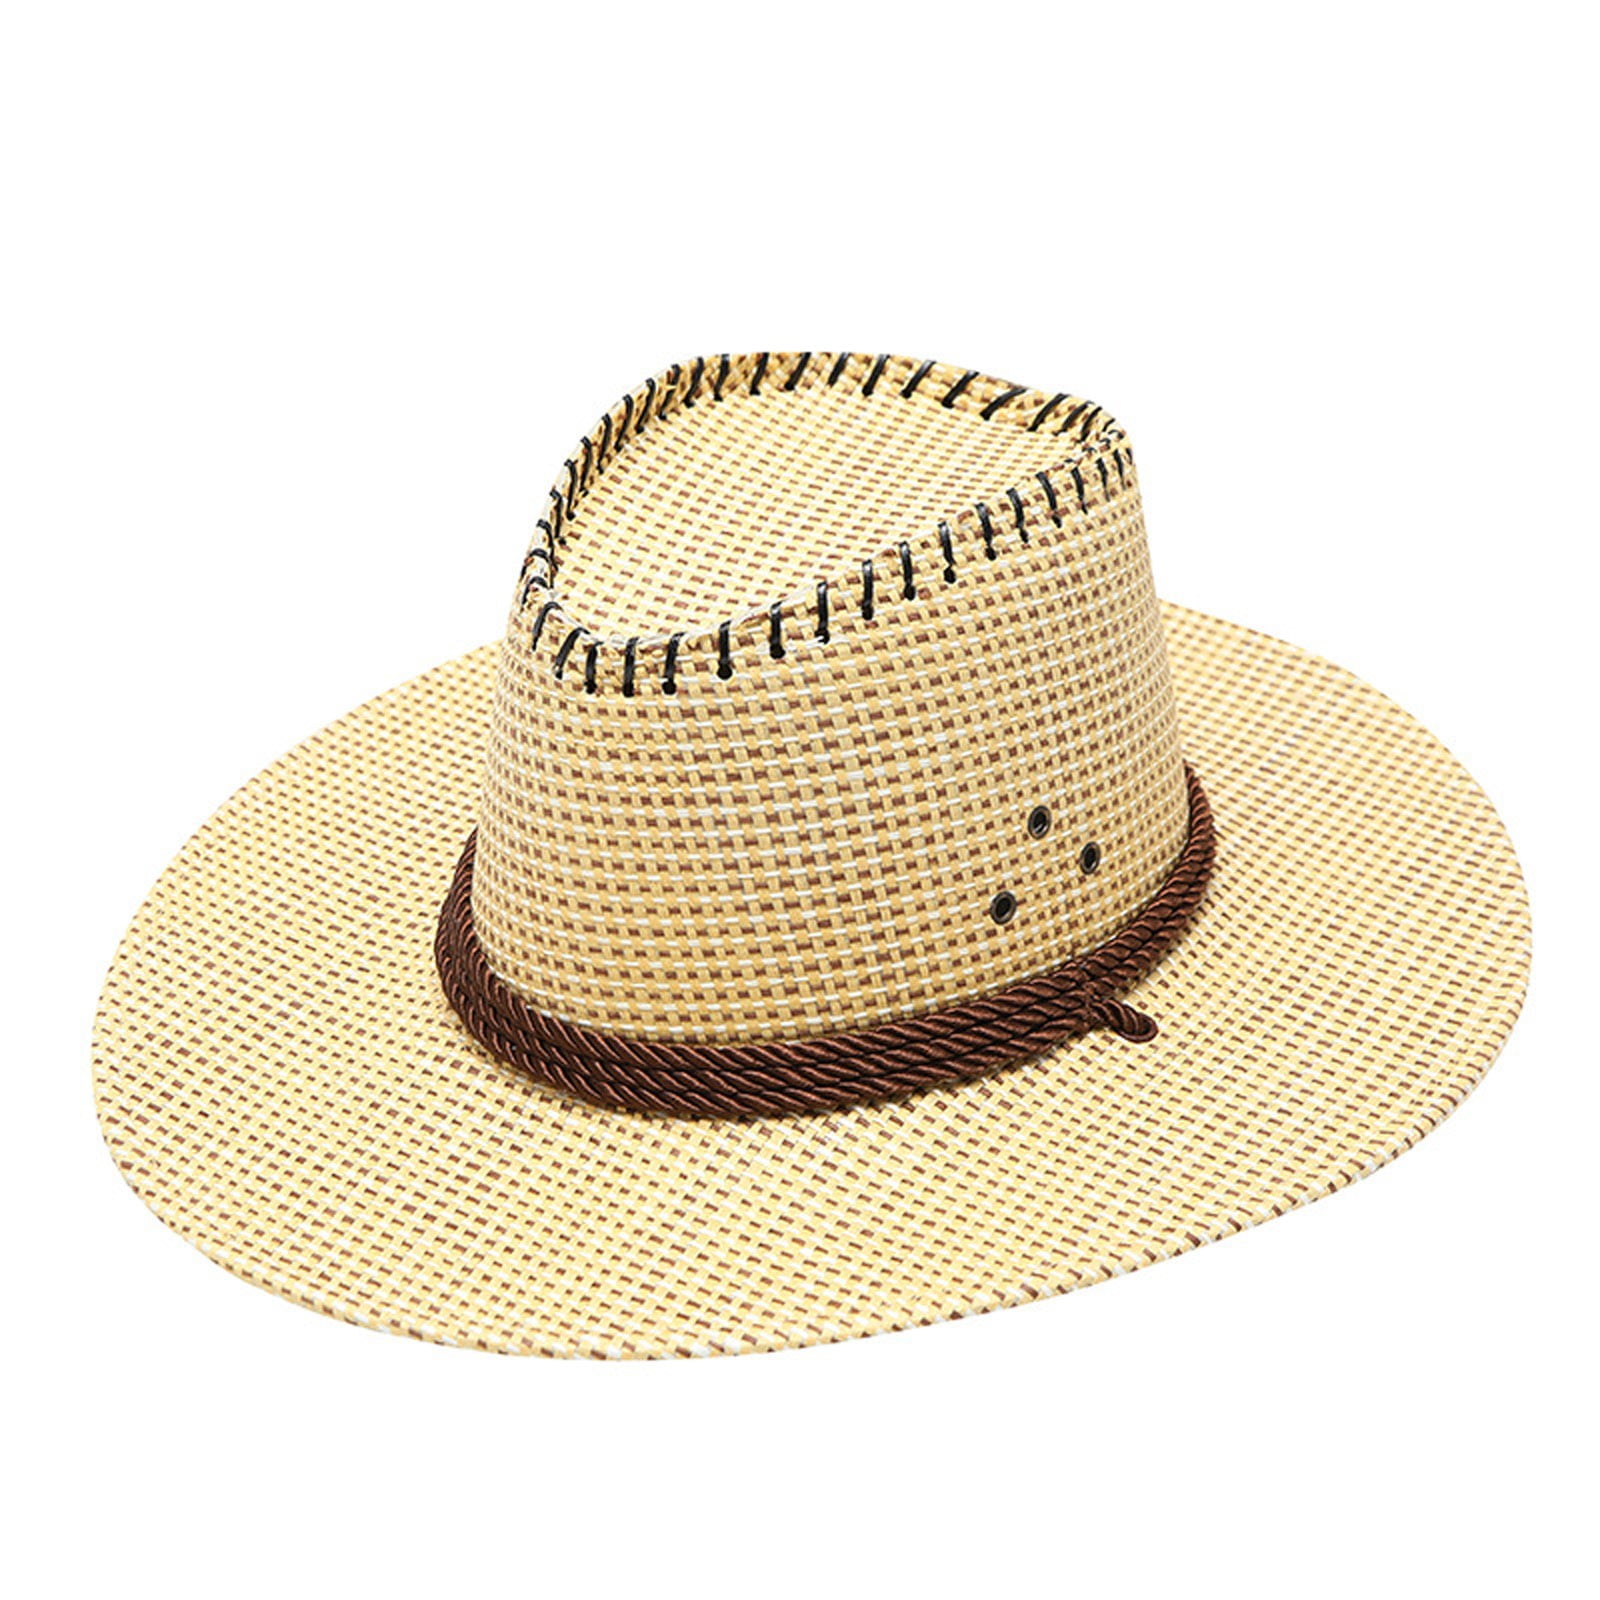 Hunpta Cowboy Hats for Men Women adult Casual Plaid Summer Western Fashion Cowboy Sun Hat Wide Brim Travel Sun Cap, adult Unisex, Size: One size